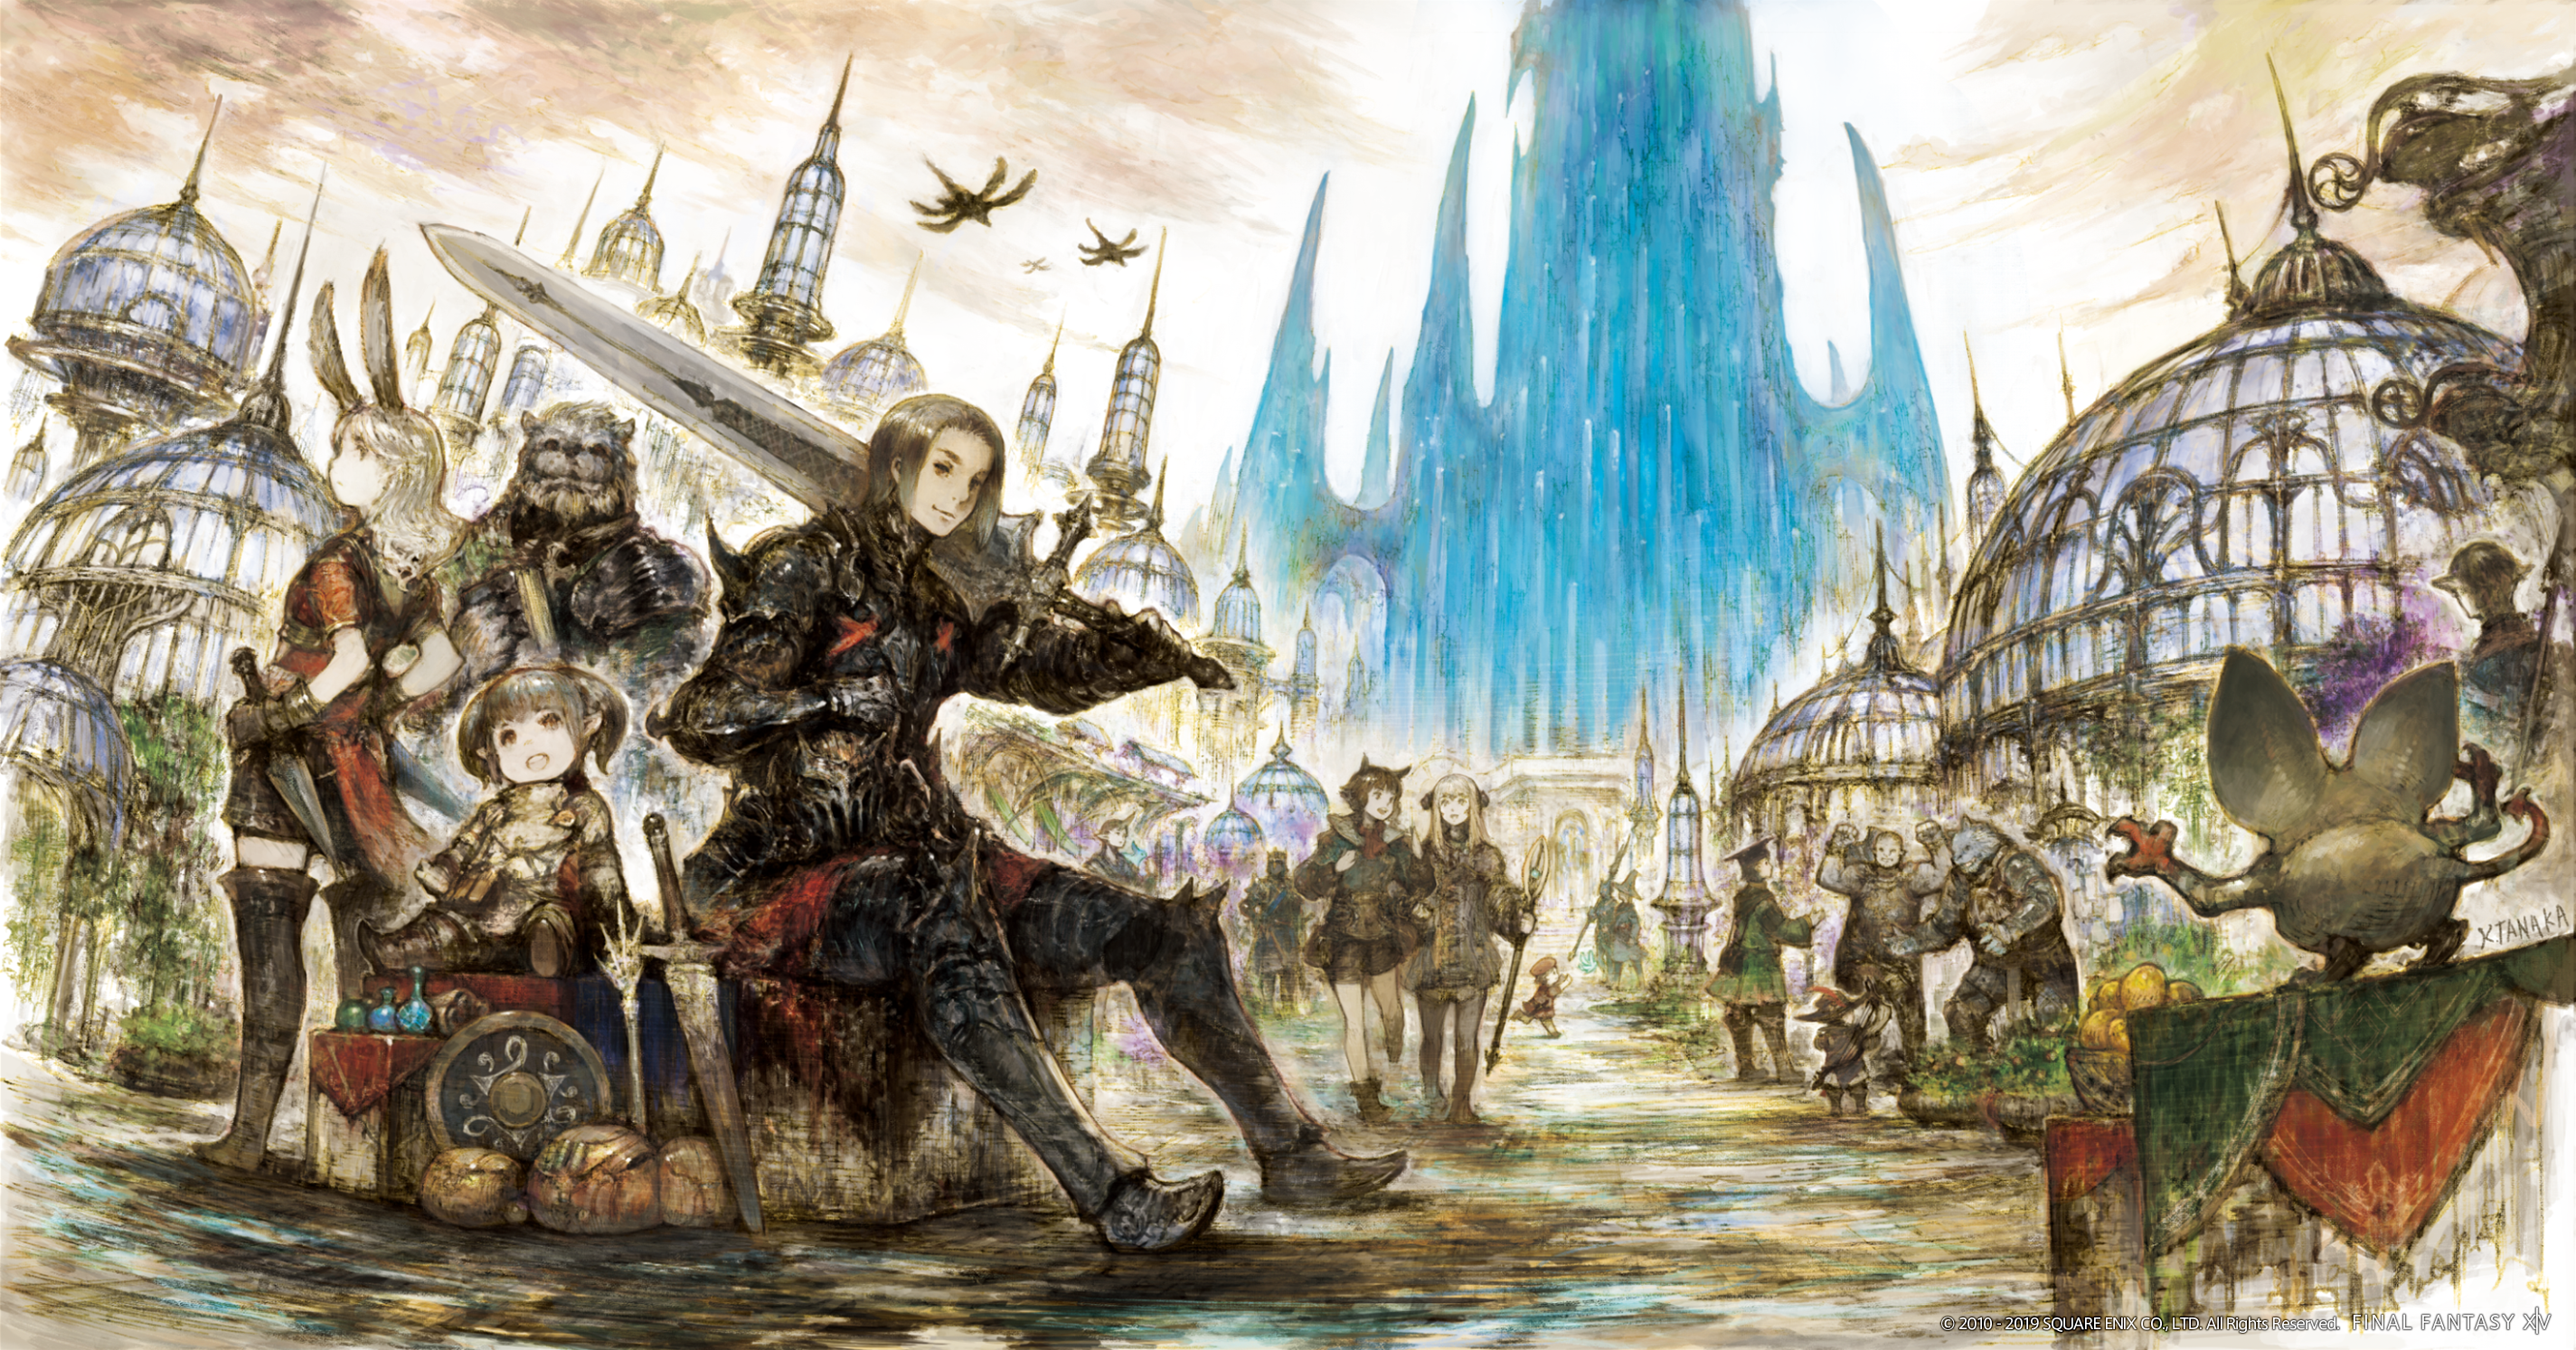 Final Fantasy XIV Shadowbringer Wallpaper. Final fantasy xiv